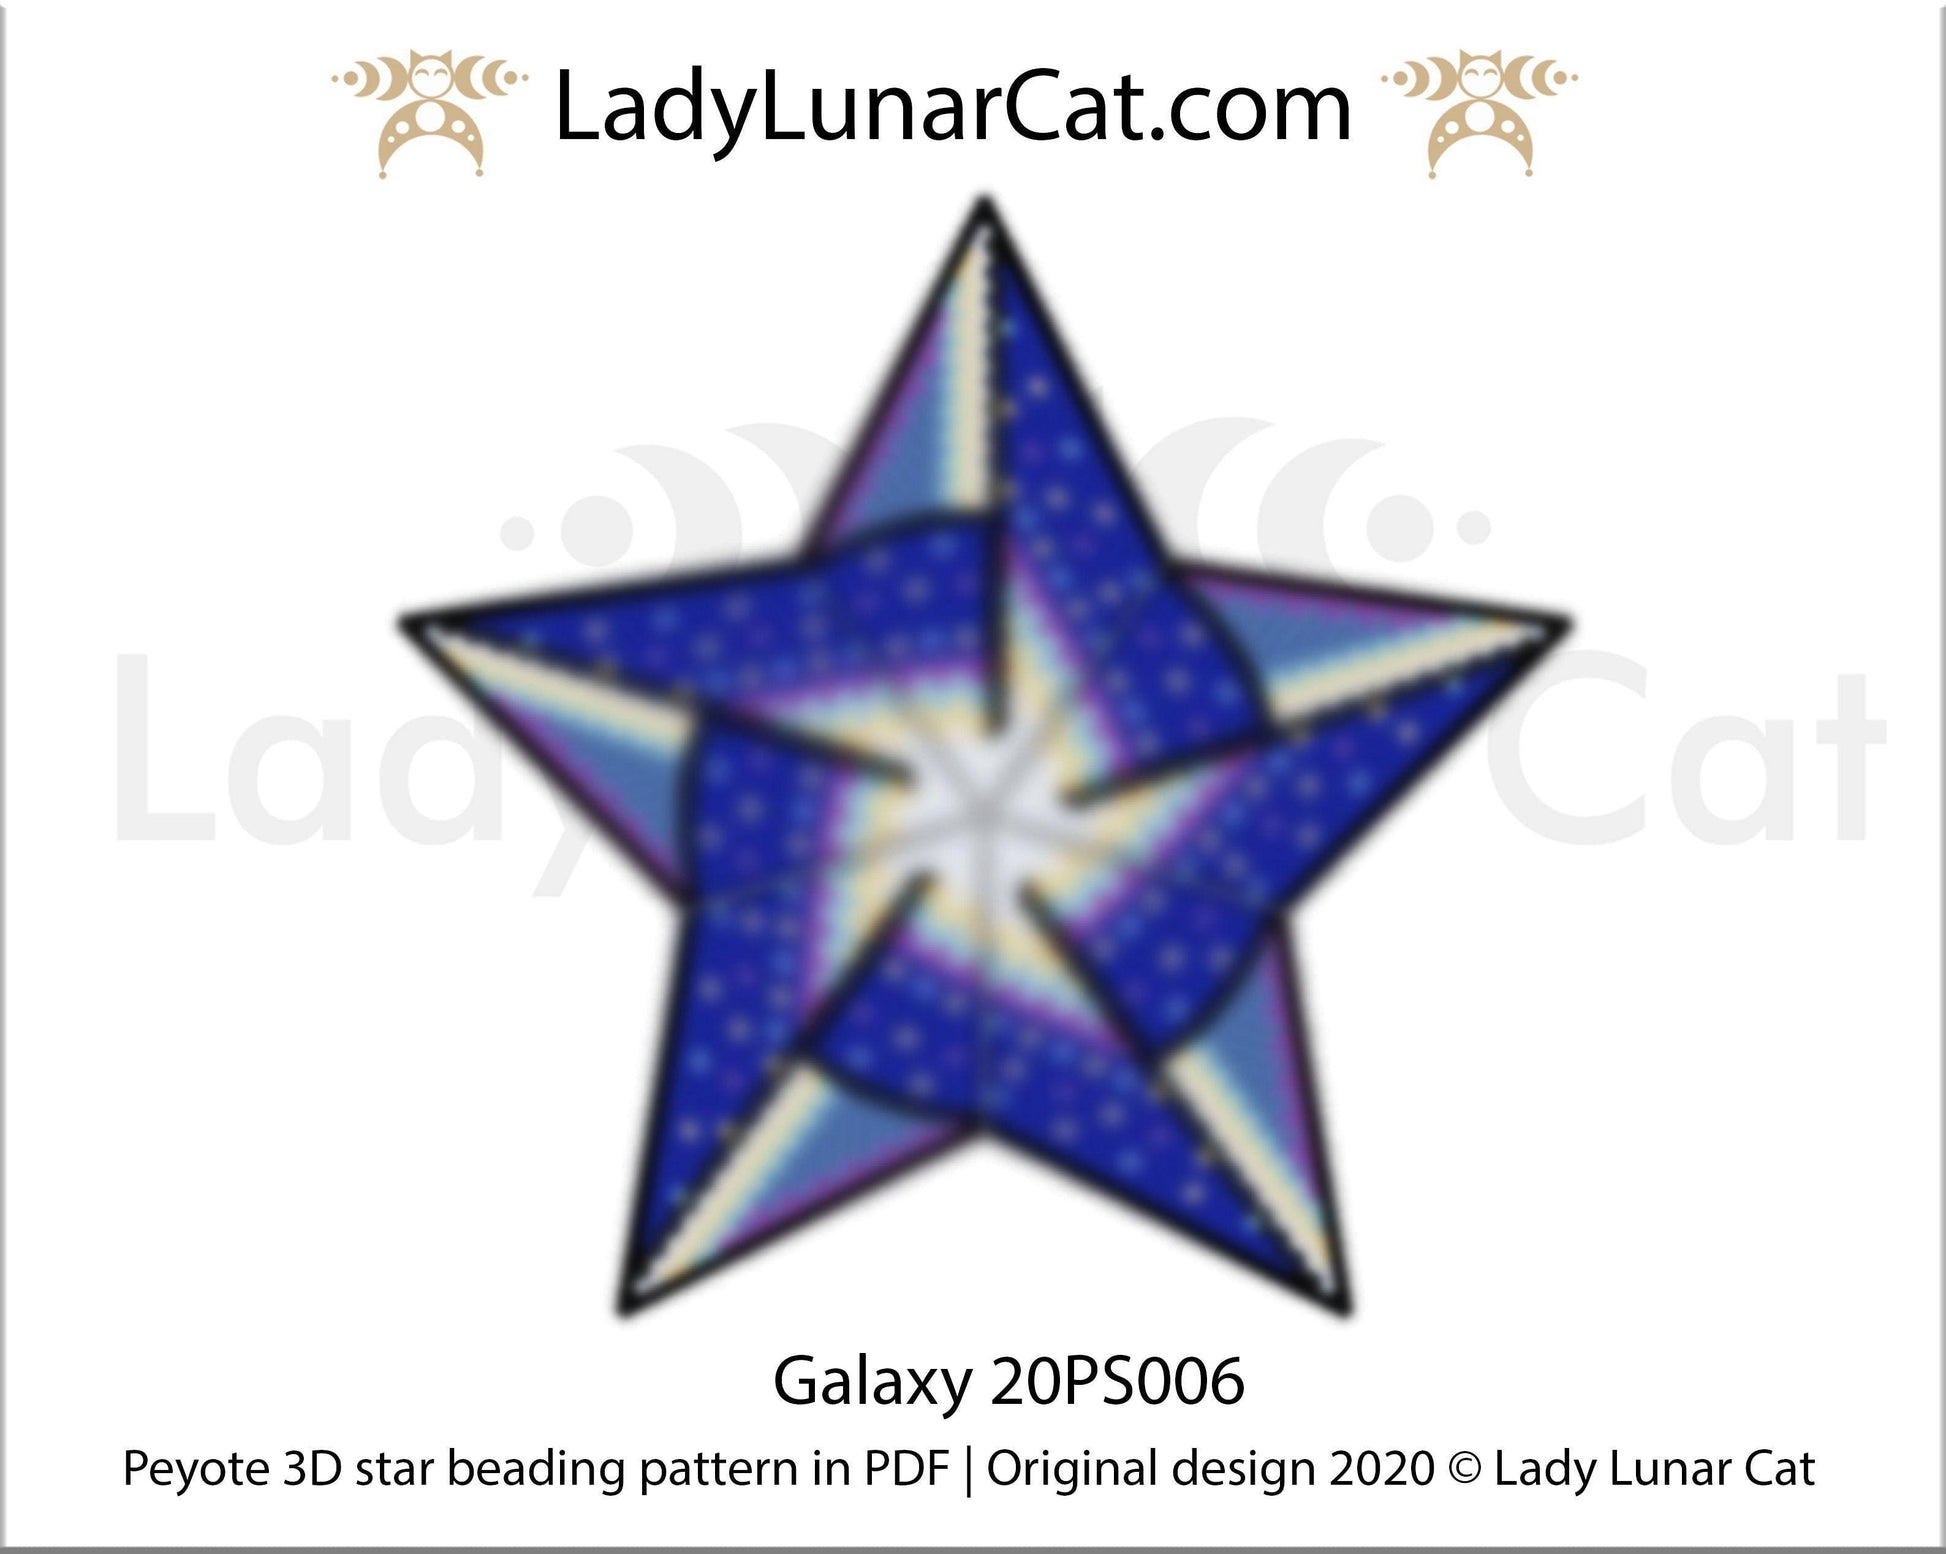 Peyote star patterns for beading celestial Galaxy 20PS006 LadyLunarCat